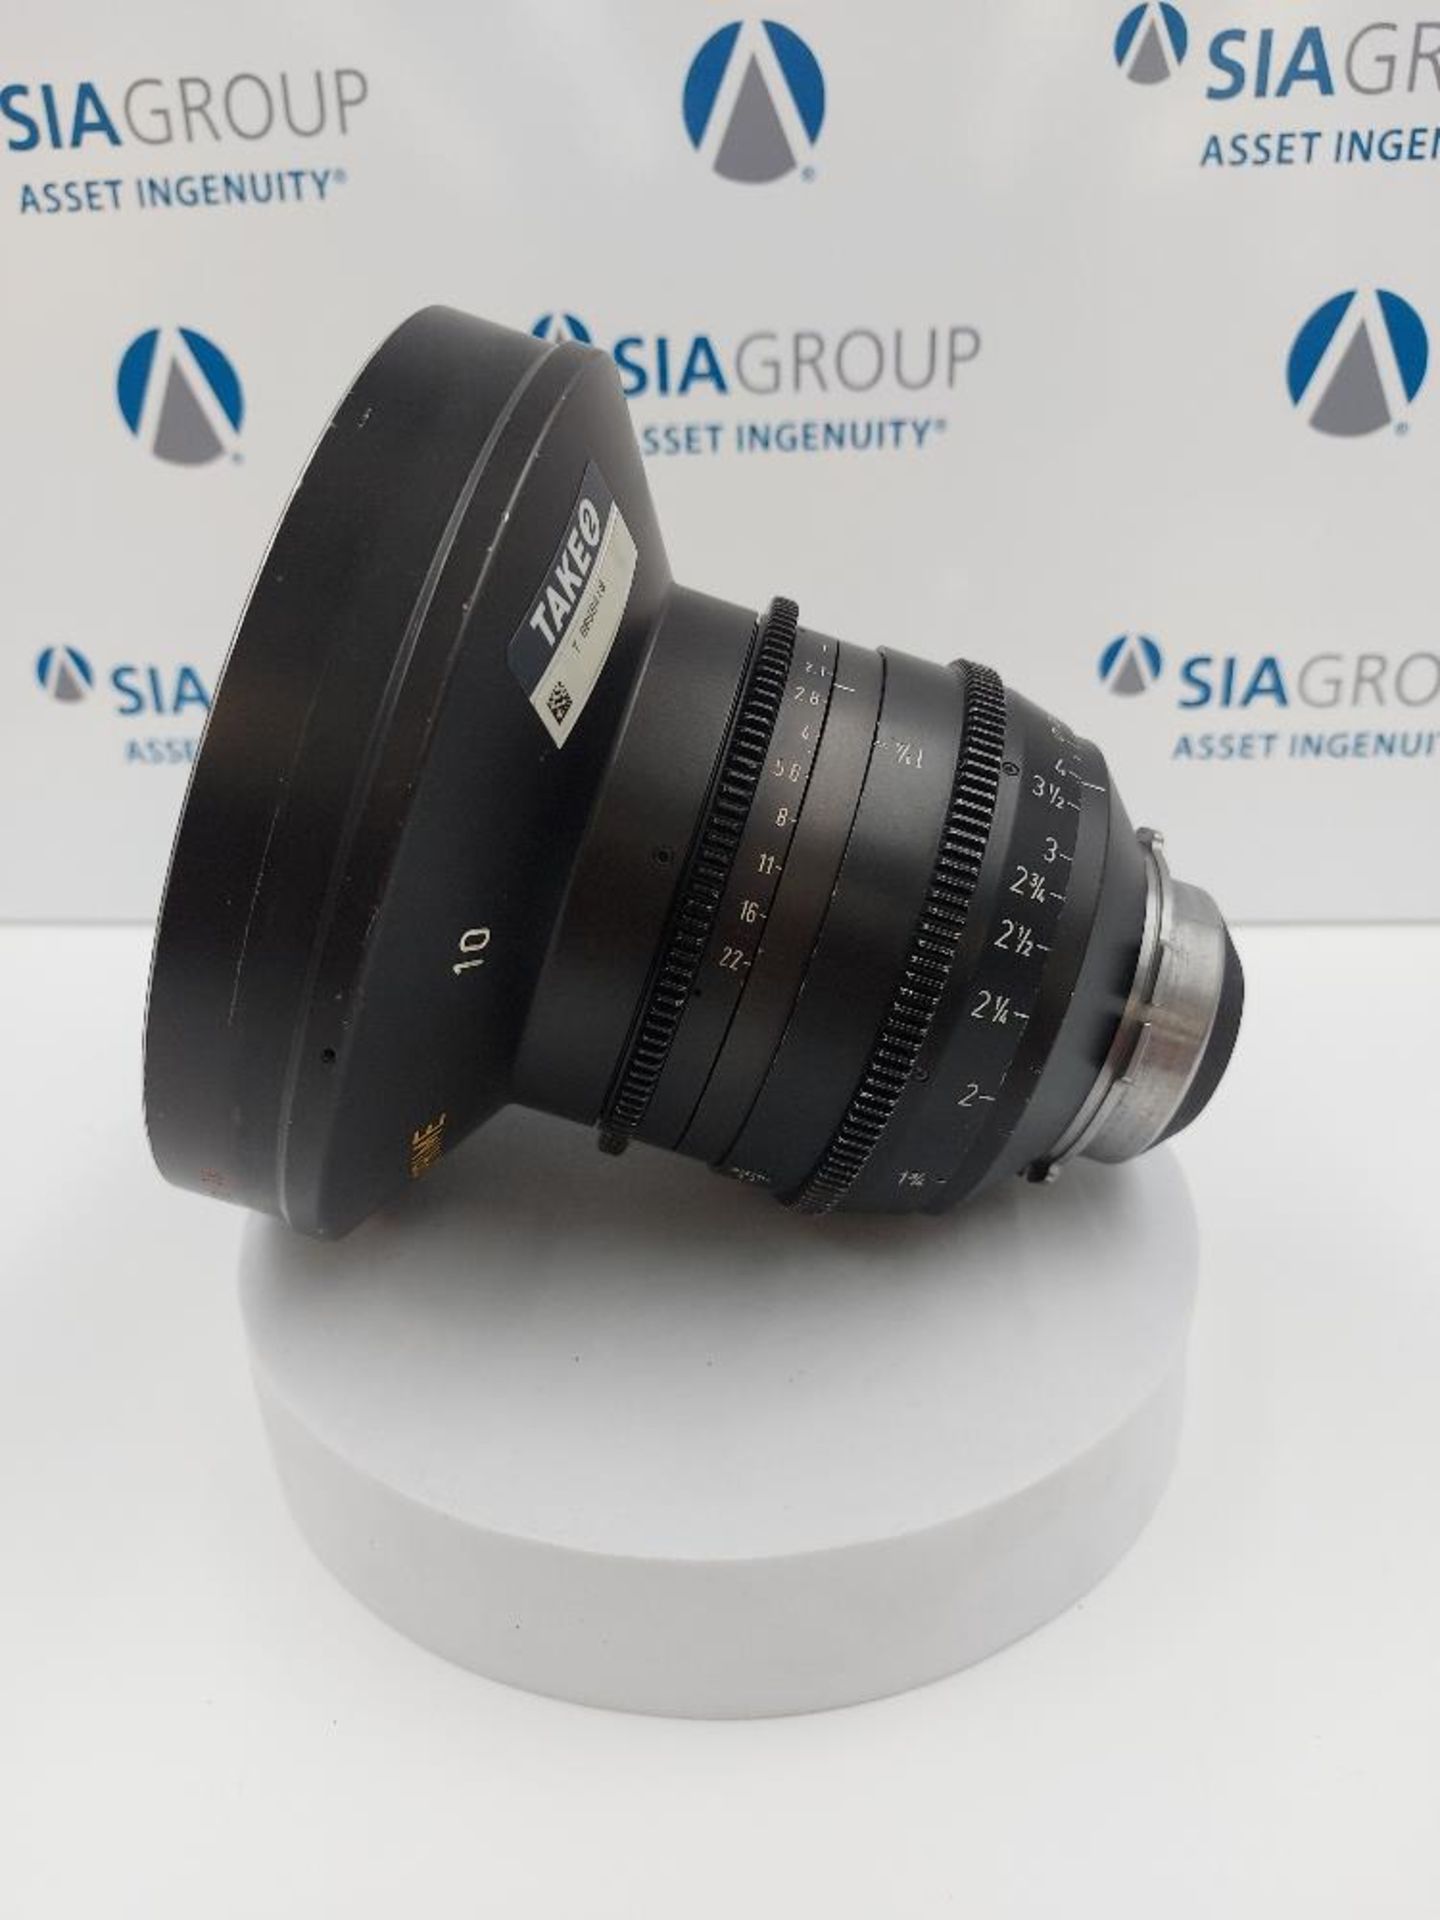 ARRI 10mm T2.1 S35 Ultra Prime PL Mount Lens Kit - Image 4 of 9